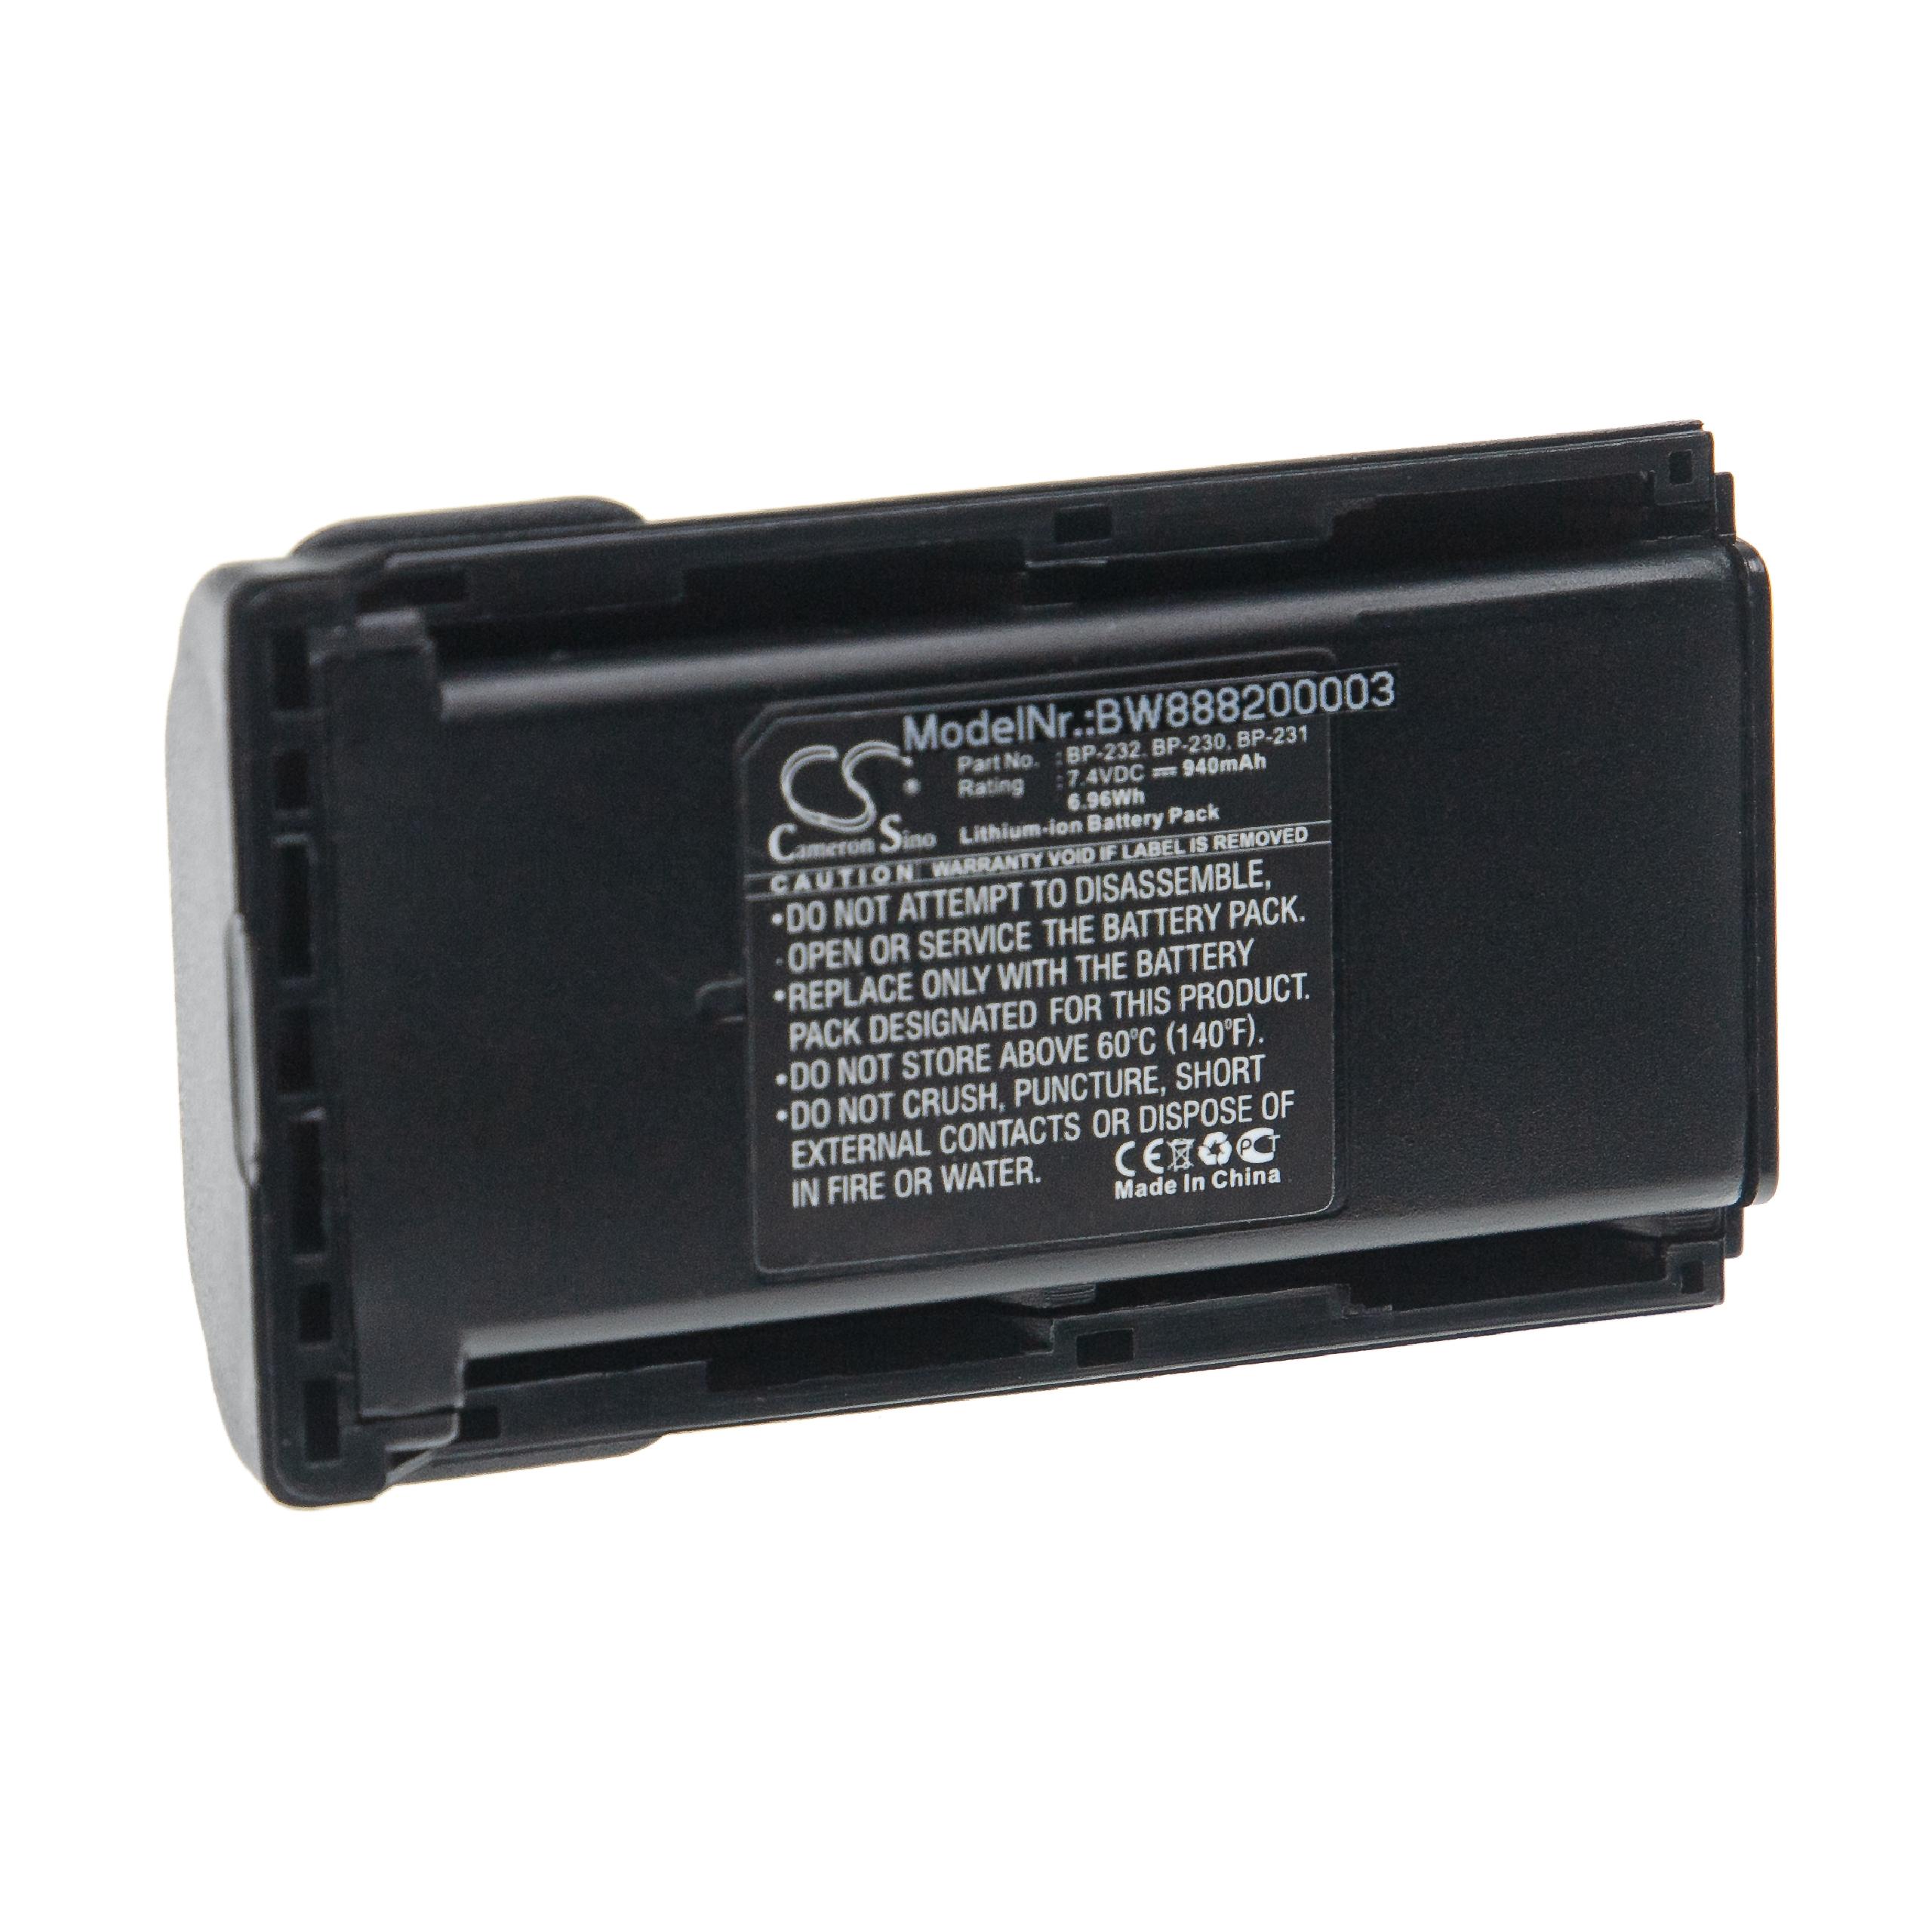 Batterie remplace Icom BJ-2000, BP-231N, BP-231, BP-230, BP-230N pour radio talkie-walkie - 940mAh 7,4V Li-ion